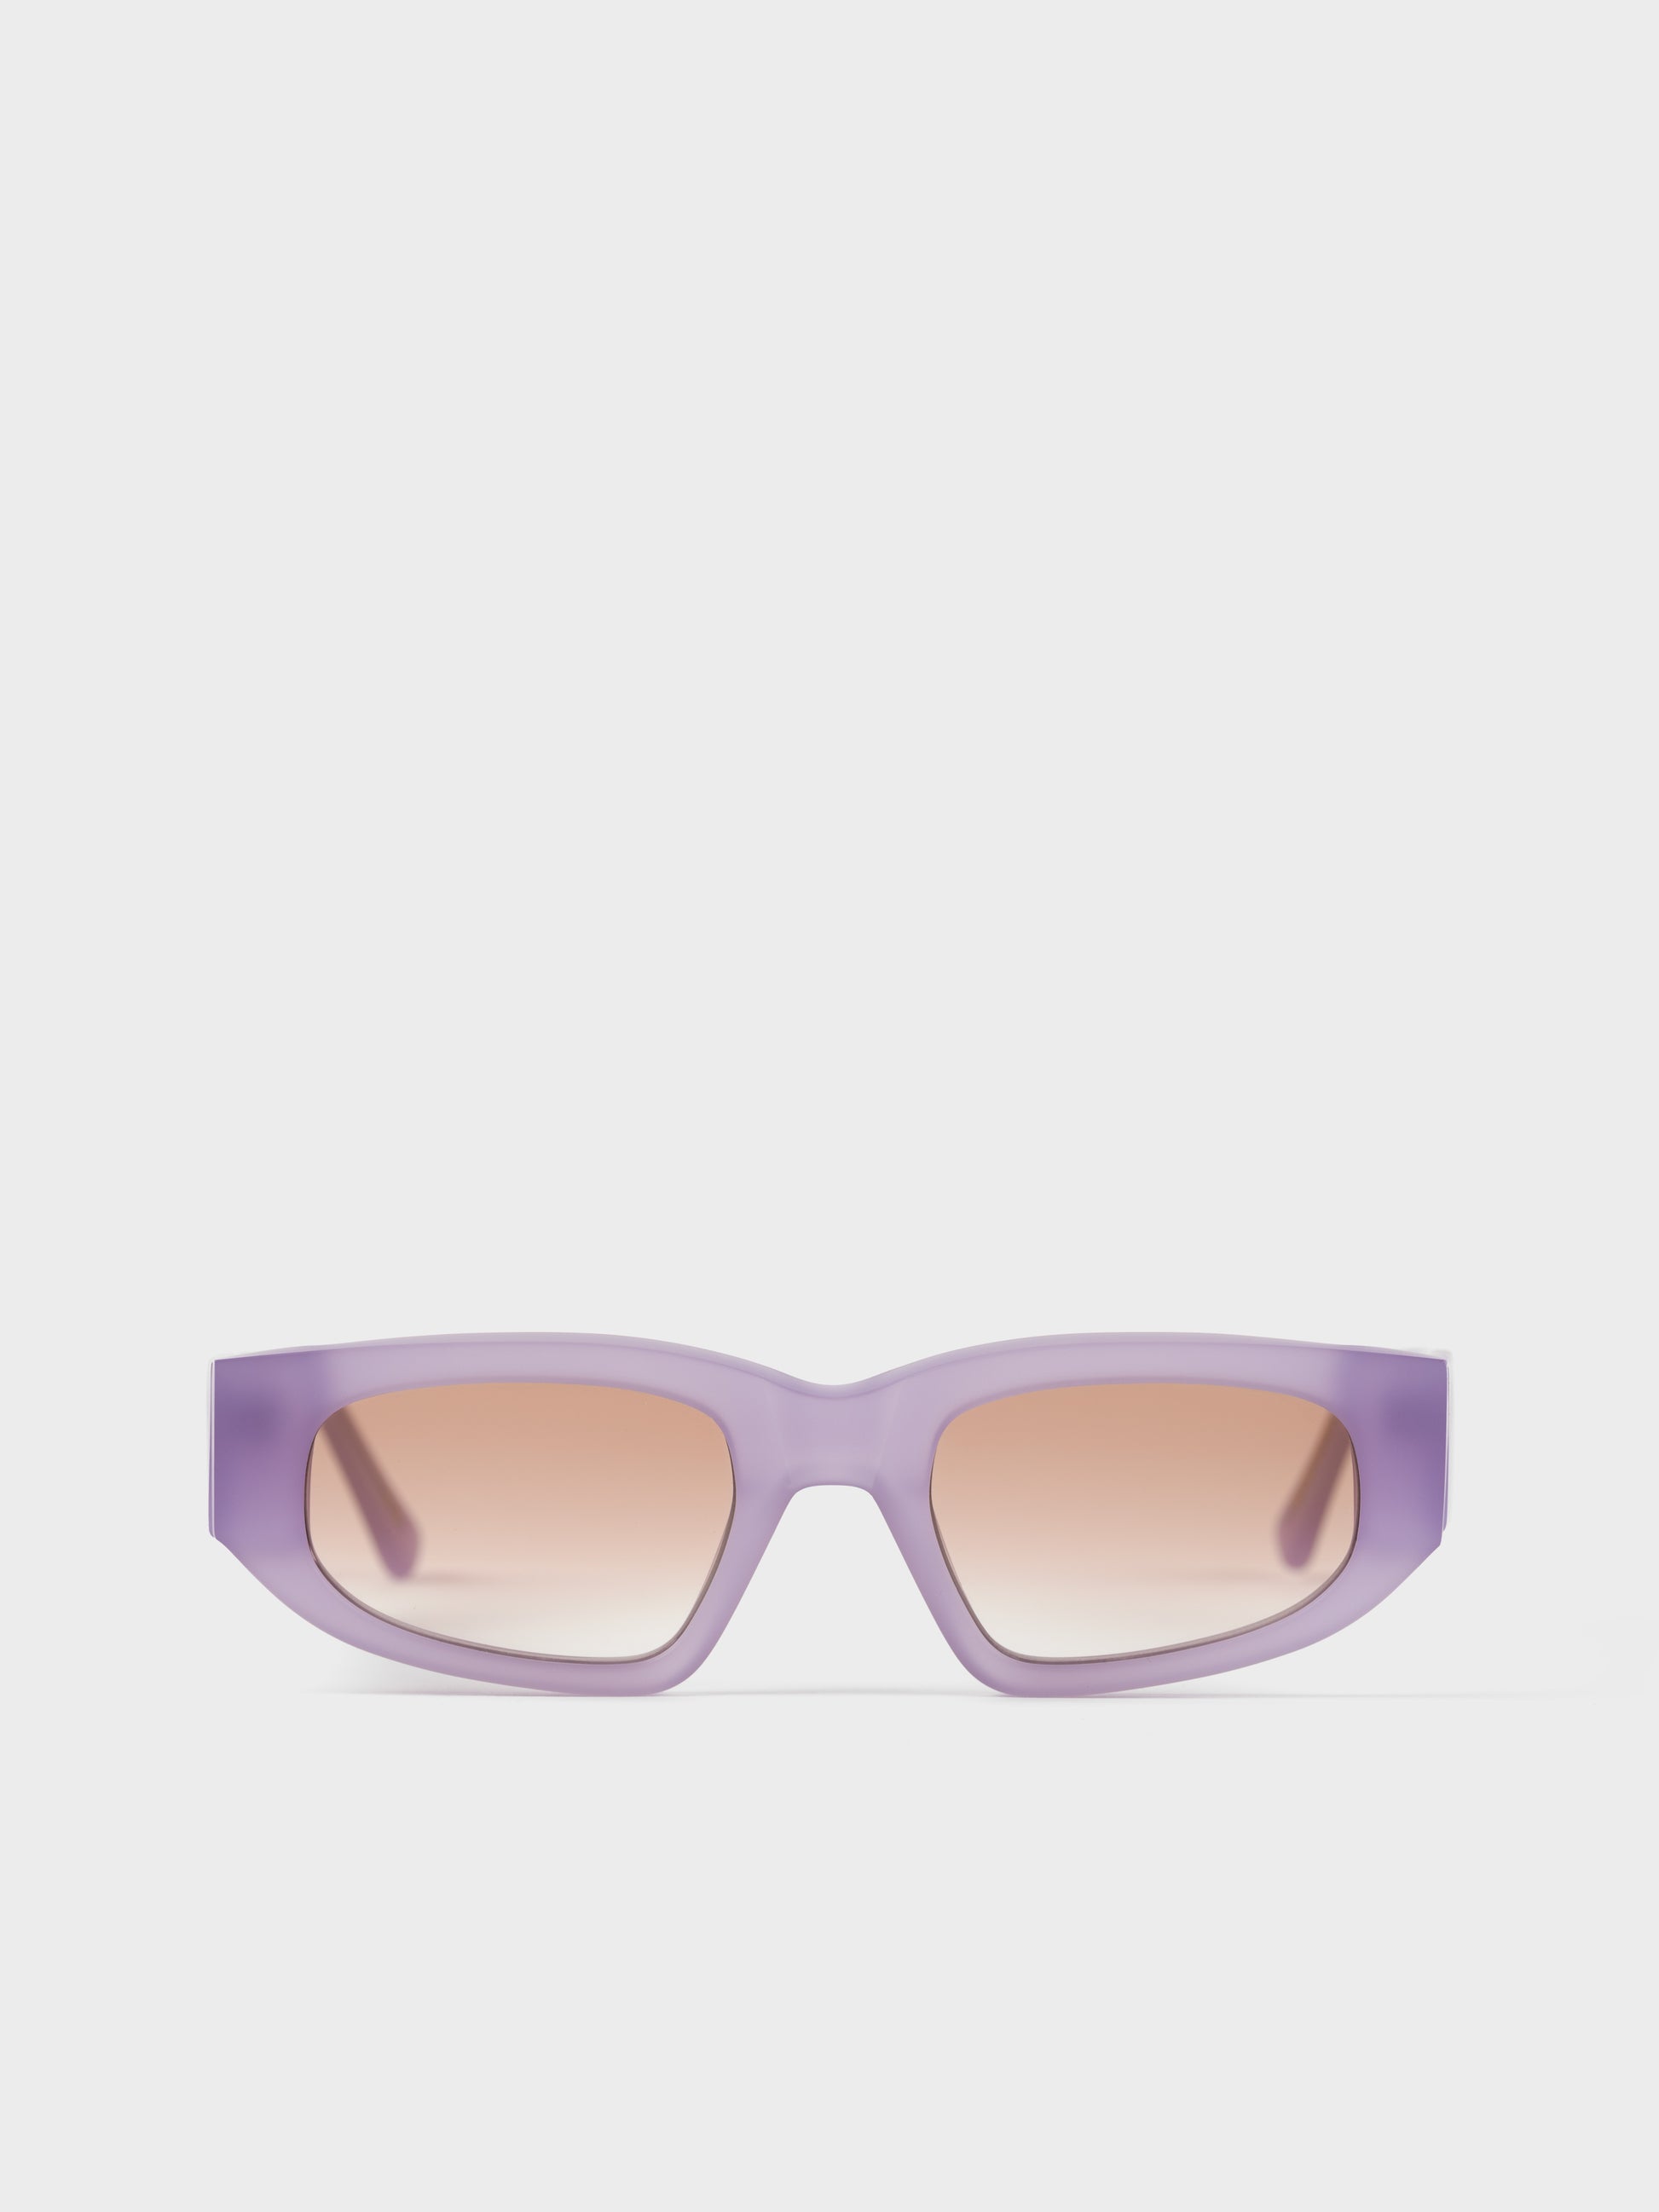 Monokel Sunglasses - Eclipse/Matt Lilac